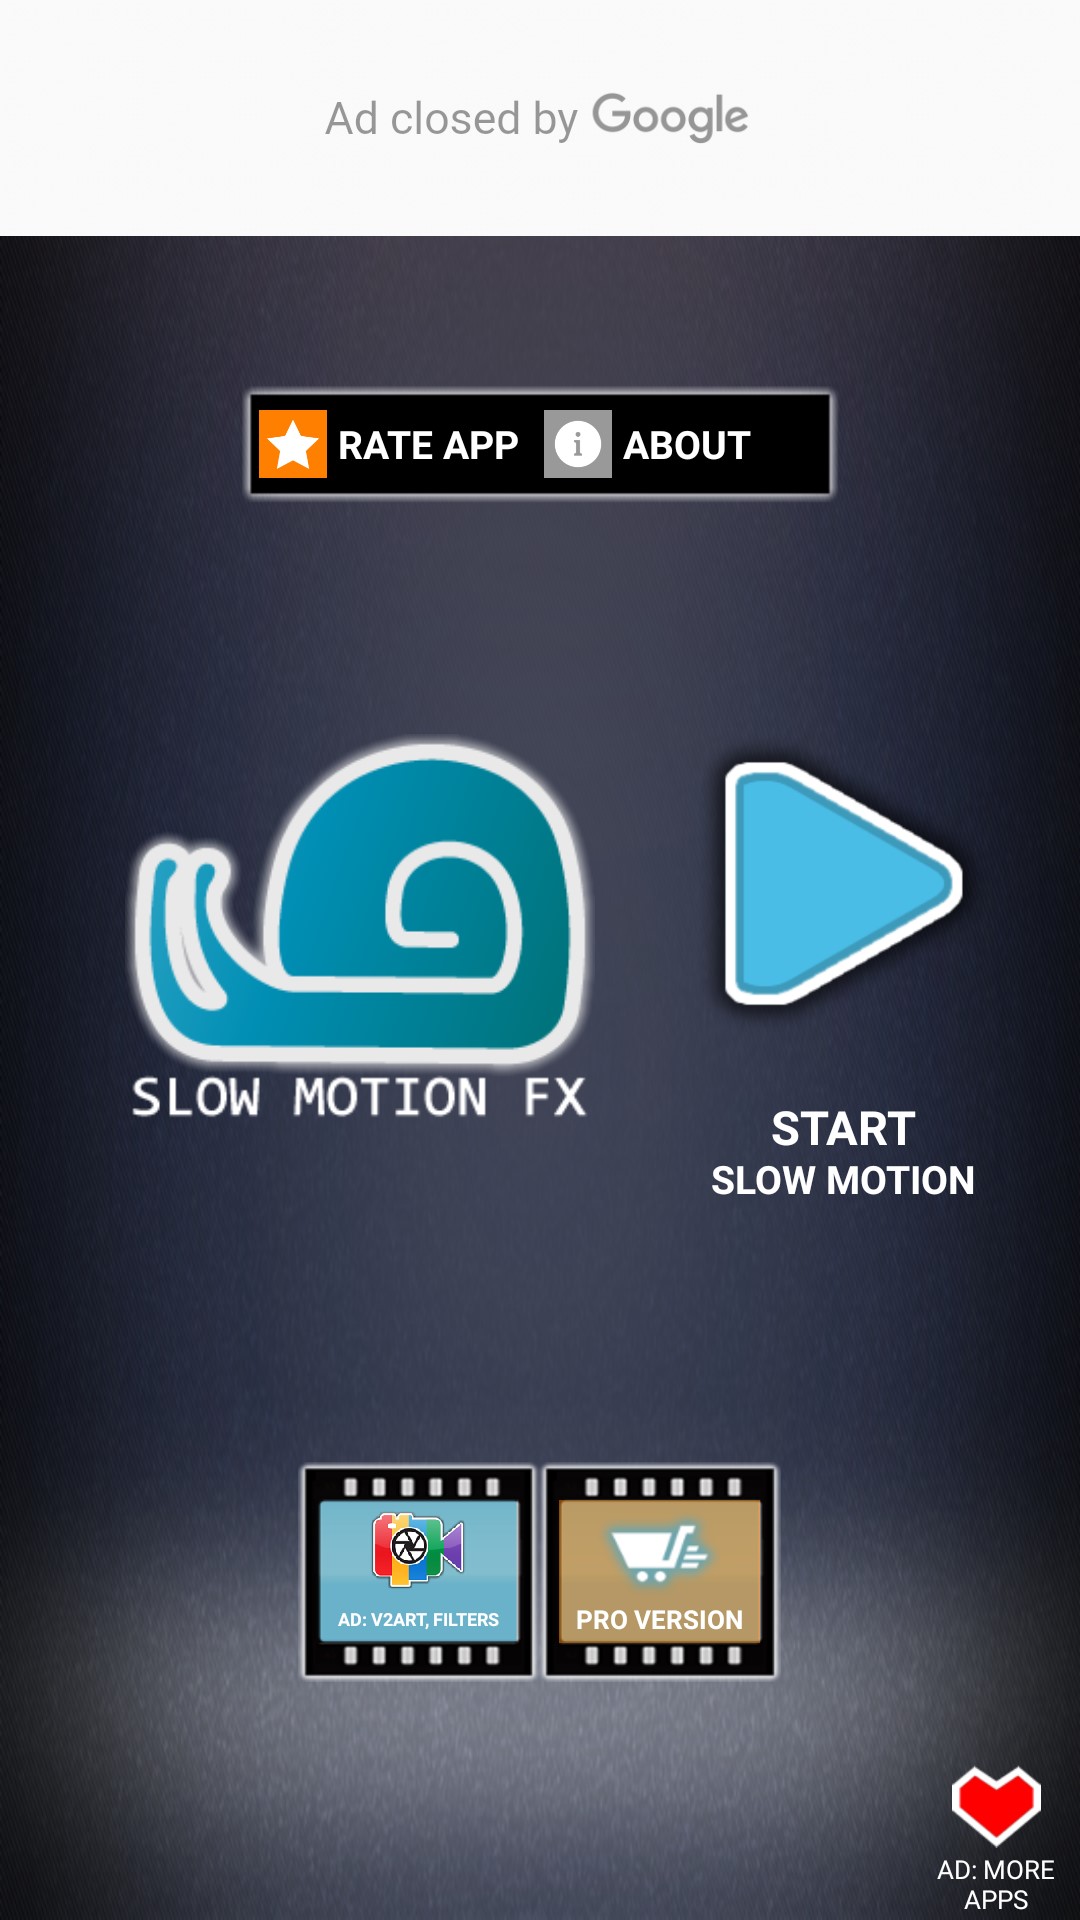 Motion app